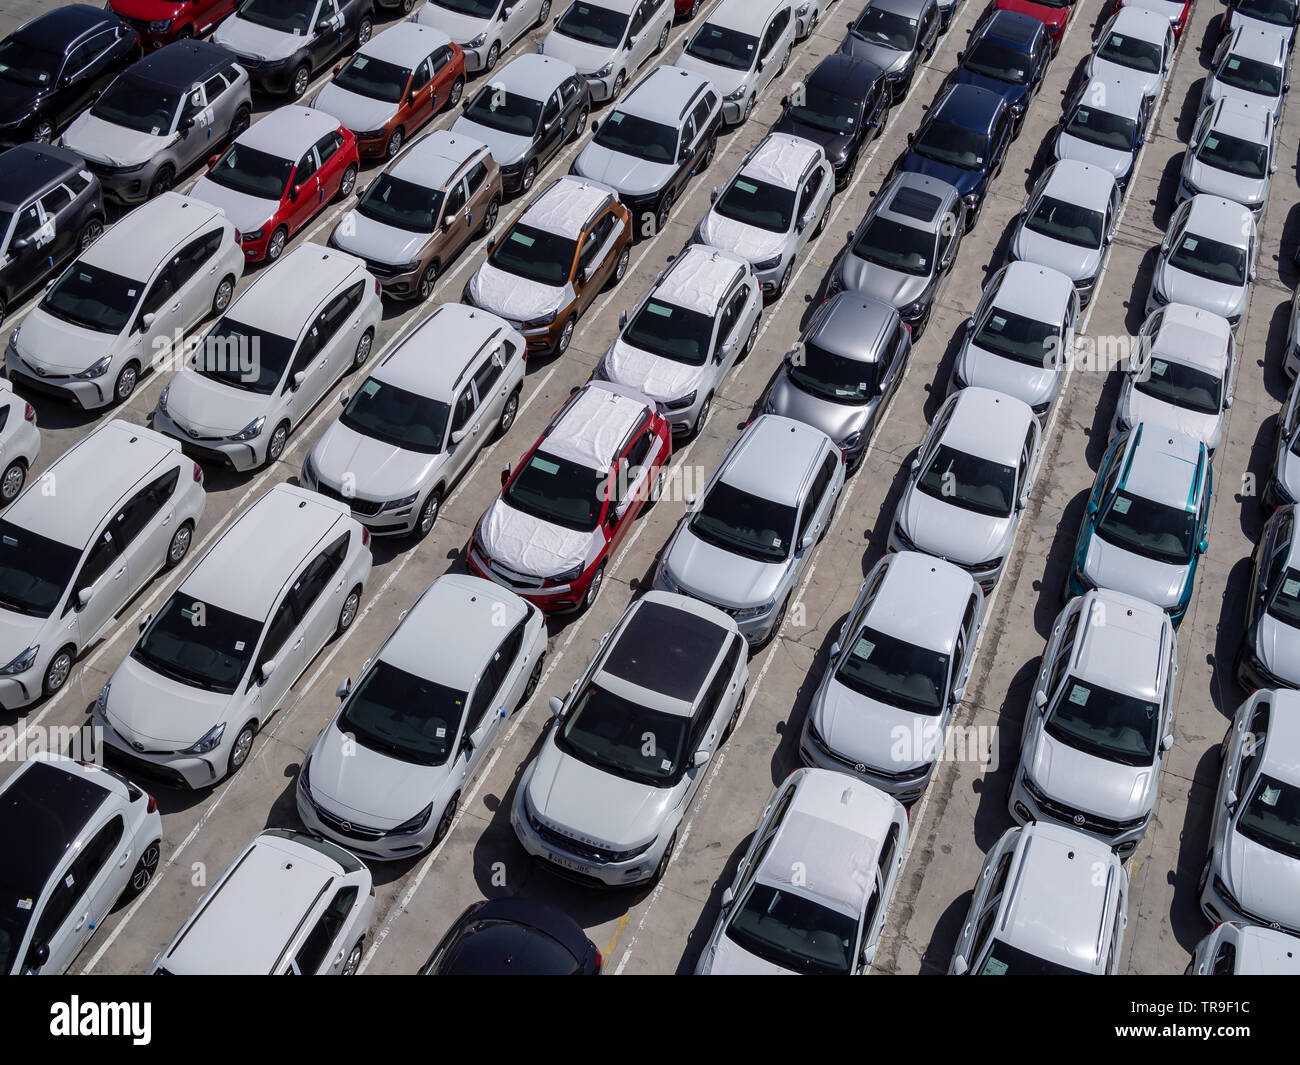 https://c8.alamy.com/comp/TR9F1C/new-cars-parking-lot-aerial-view-sunny-day-TR9F1C.jpg